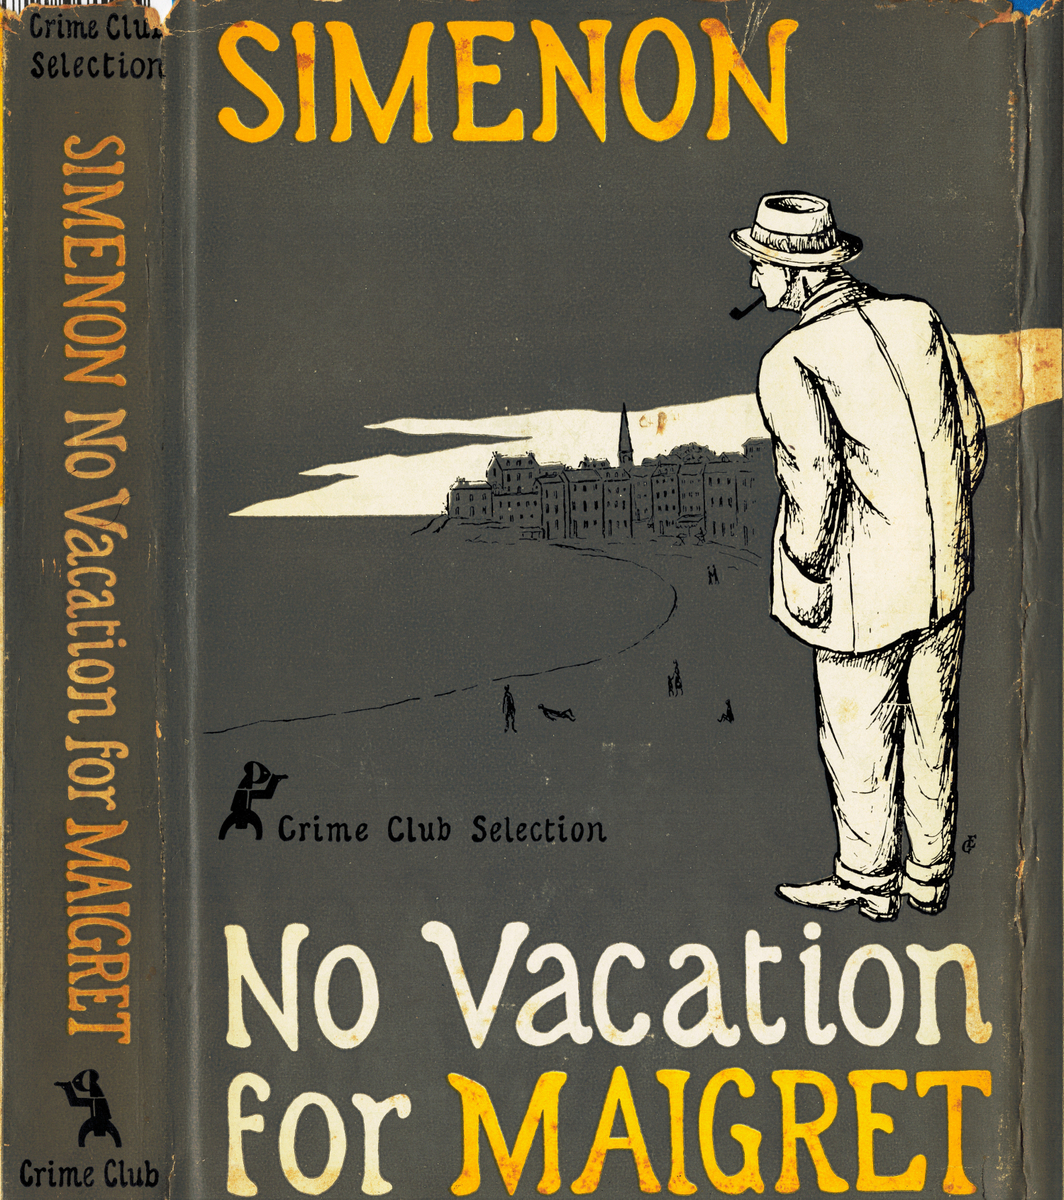 simenon. no vacation for Maigret.jpg